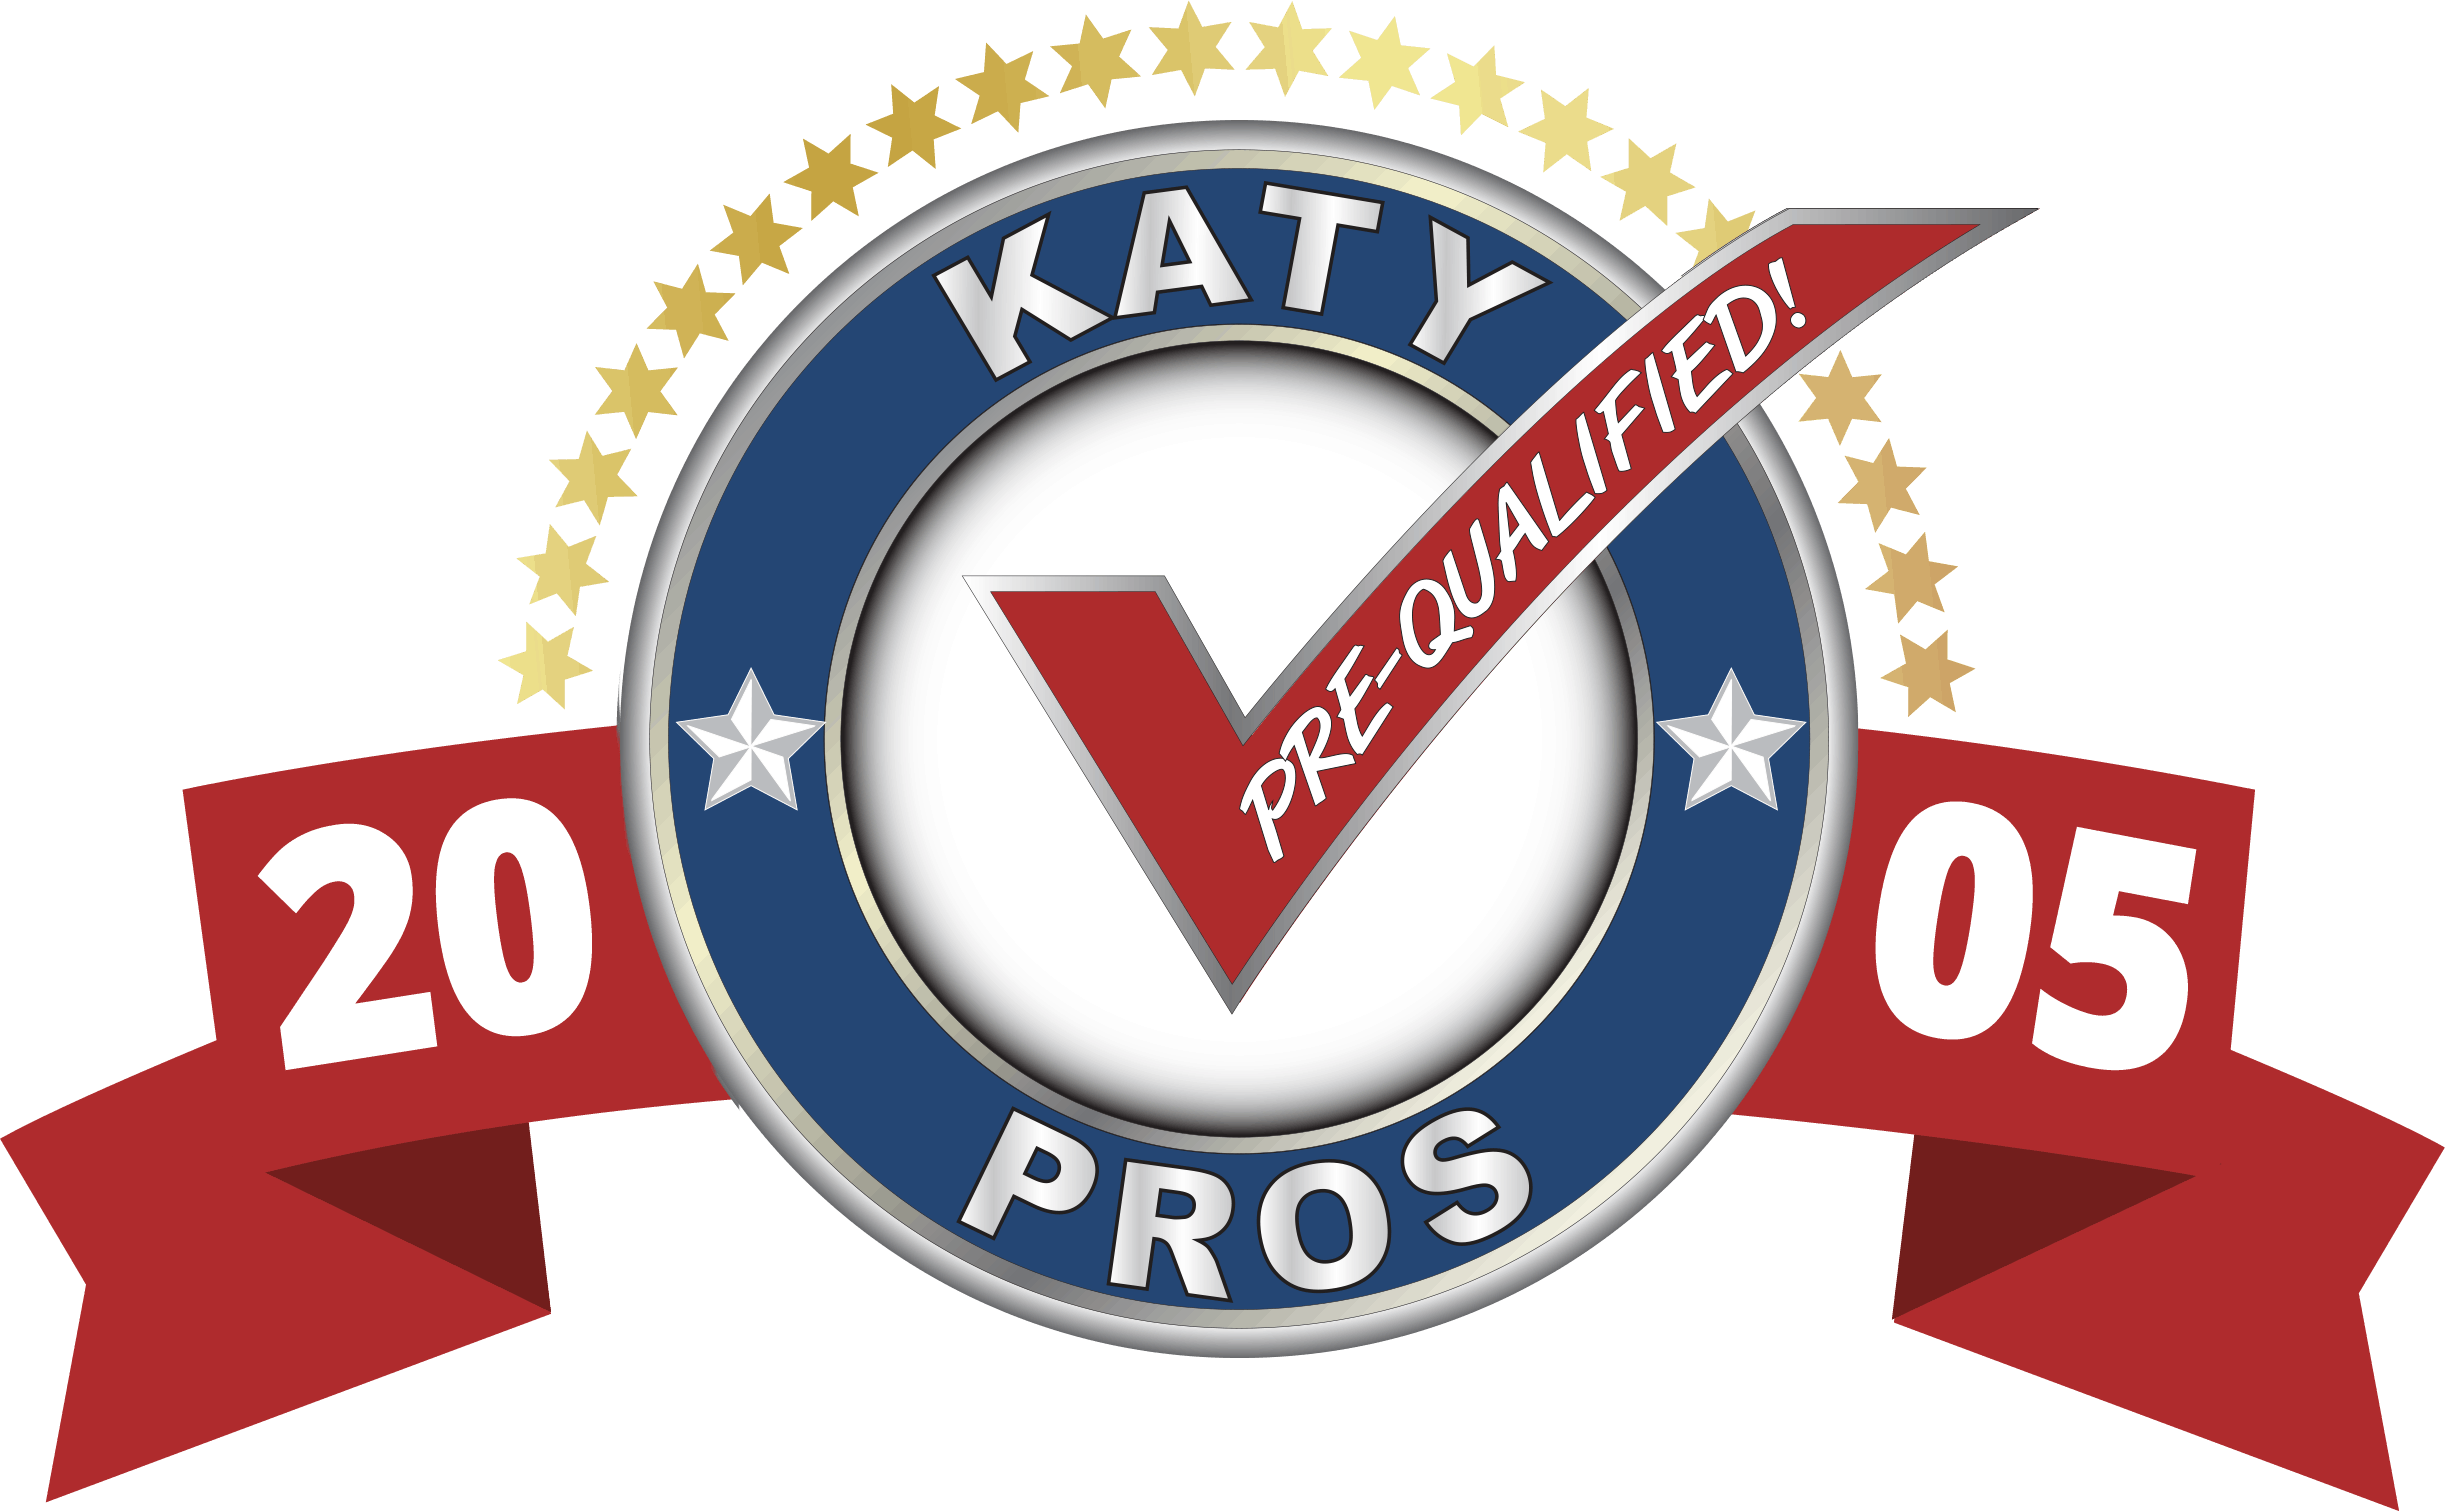 (c) Katypros.com